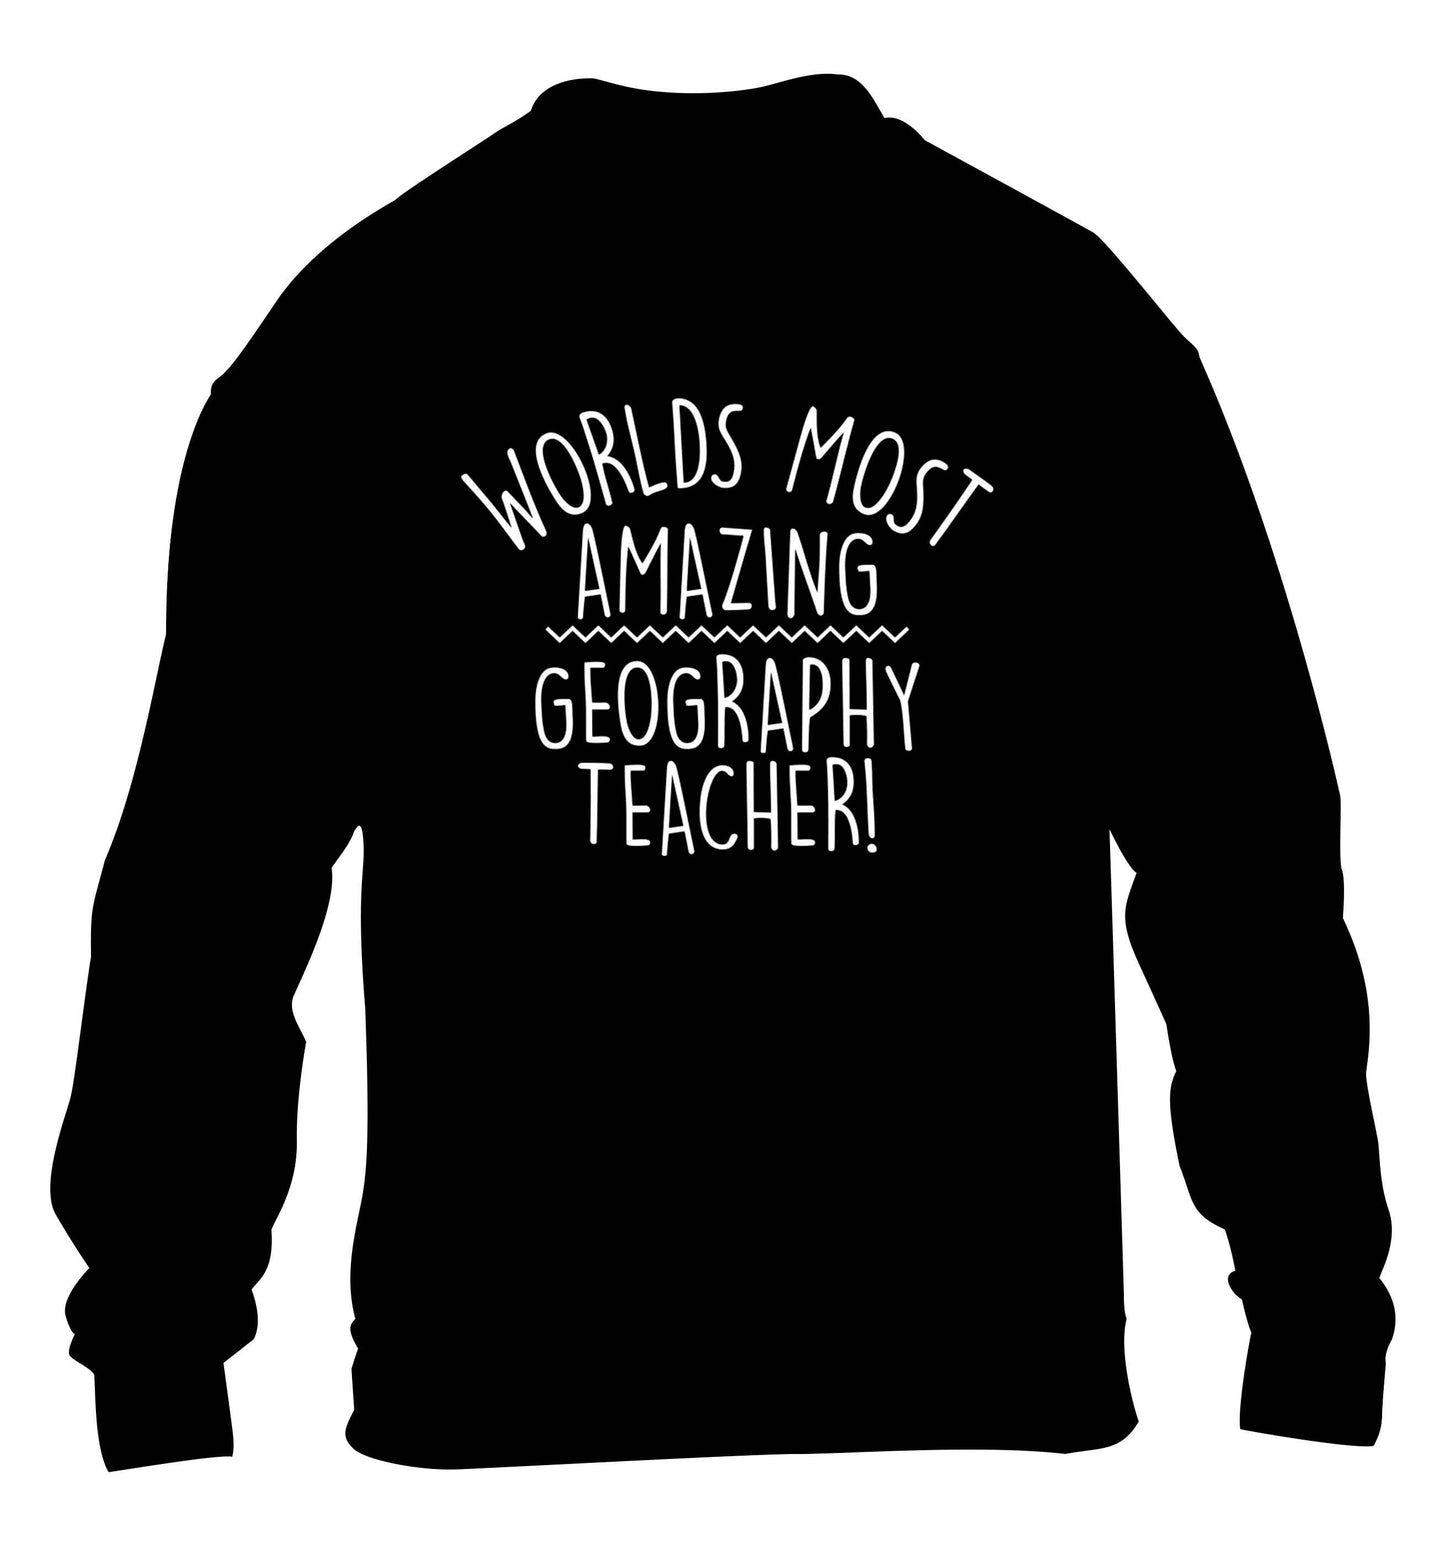 Worlds most amazing geography teacher children's black sweater 12-13 Years